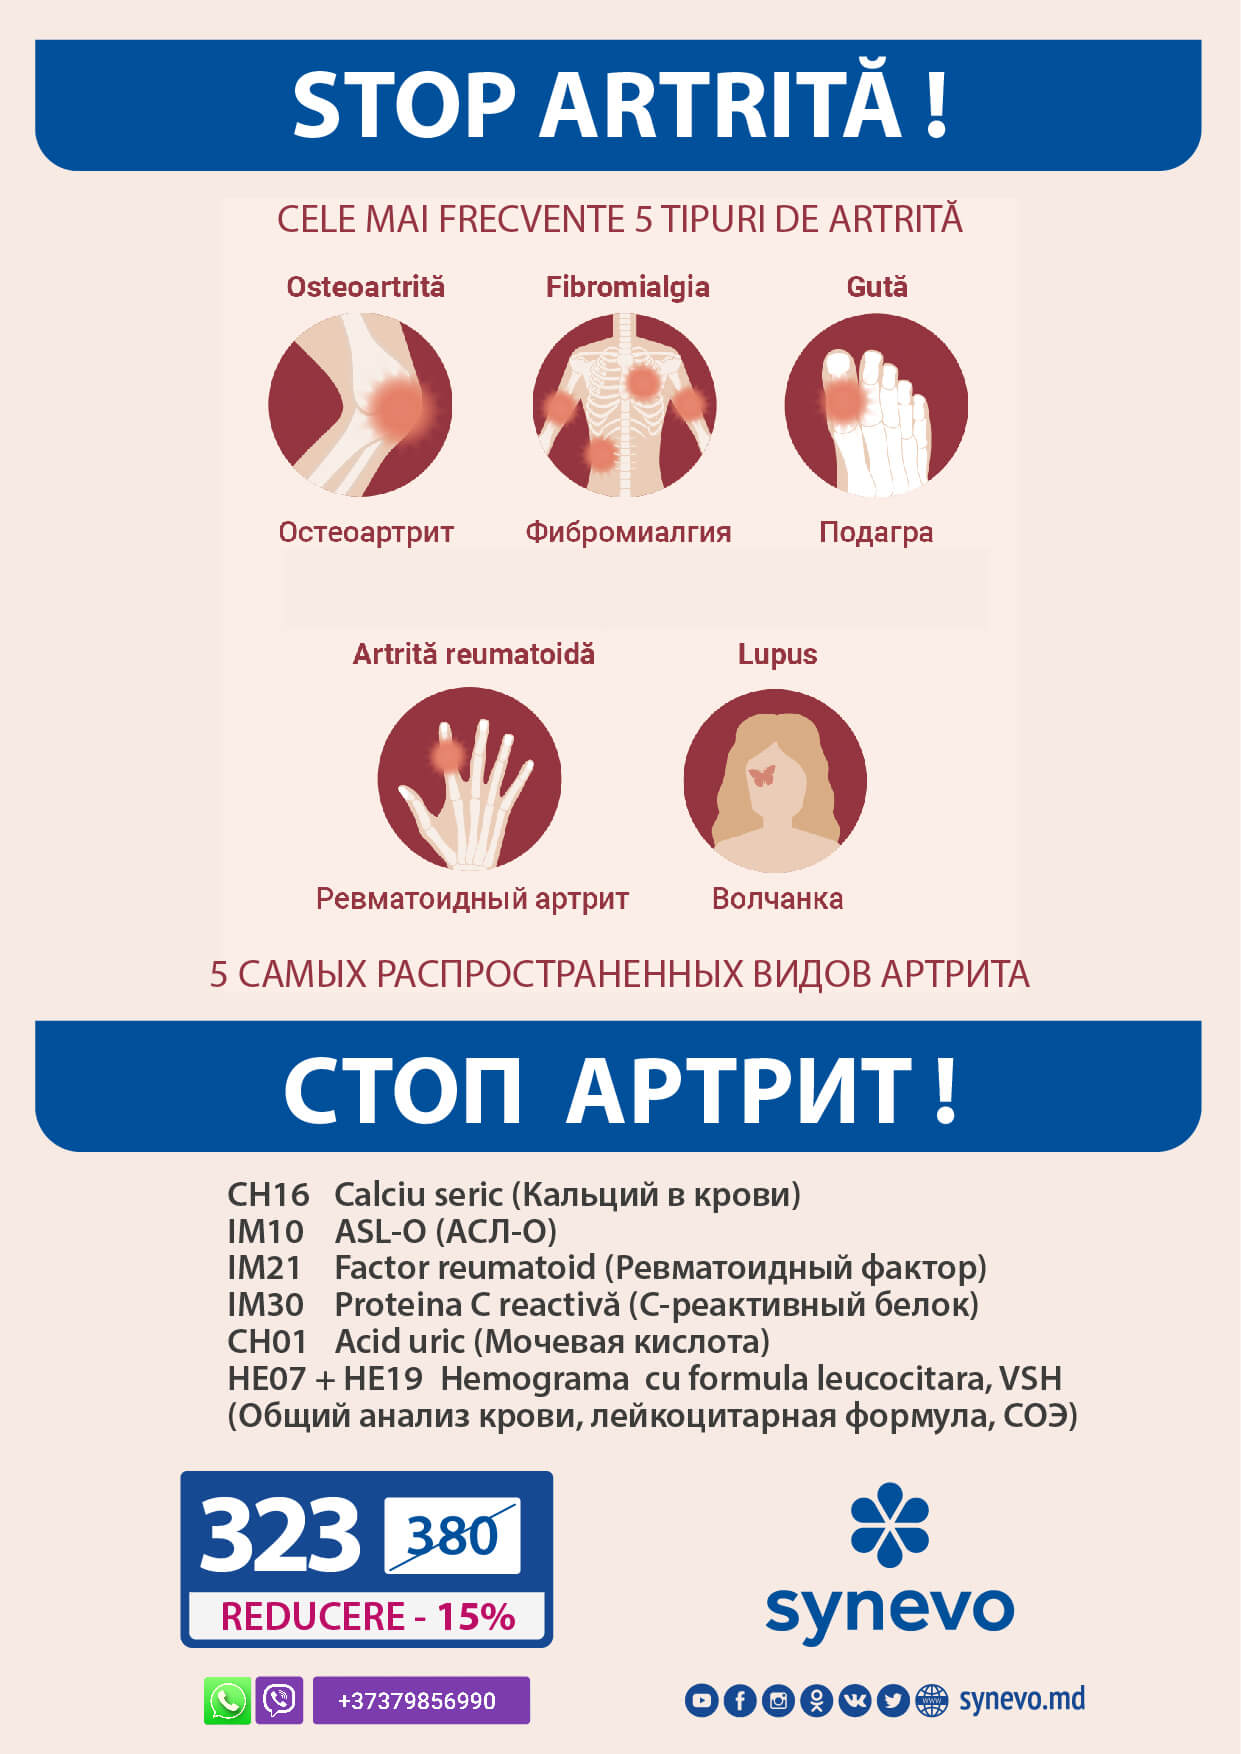 synevo factor reumatoid pret)